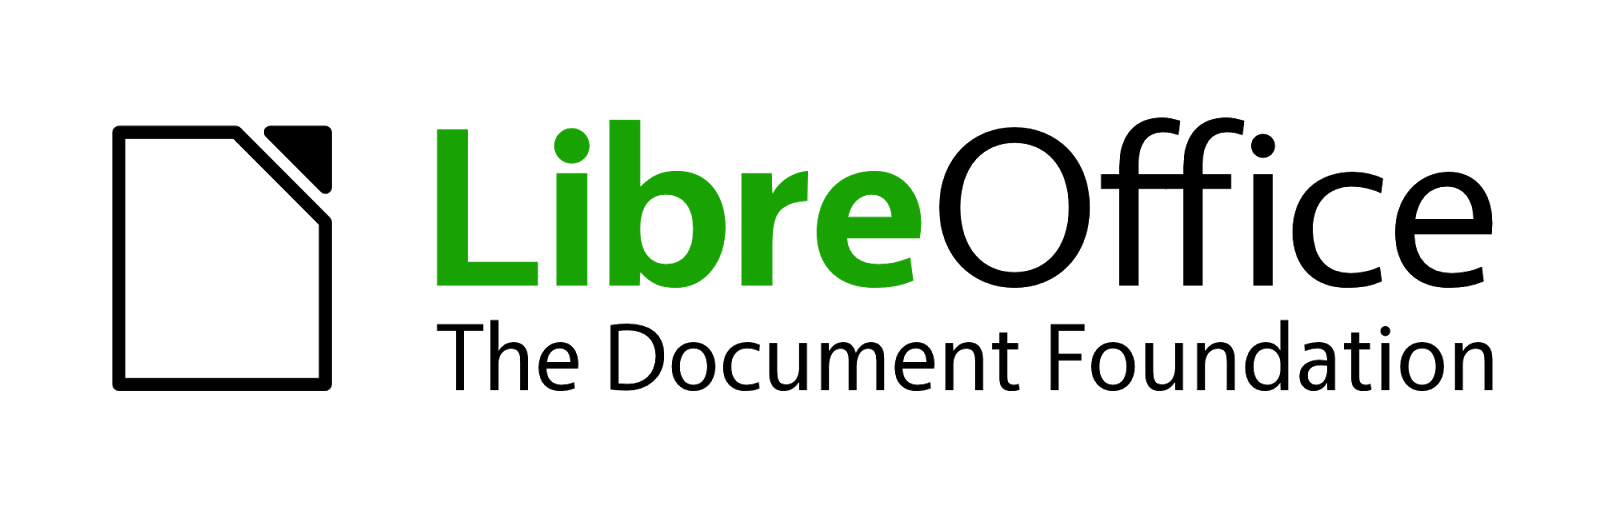 LibreOffice - elementary OS